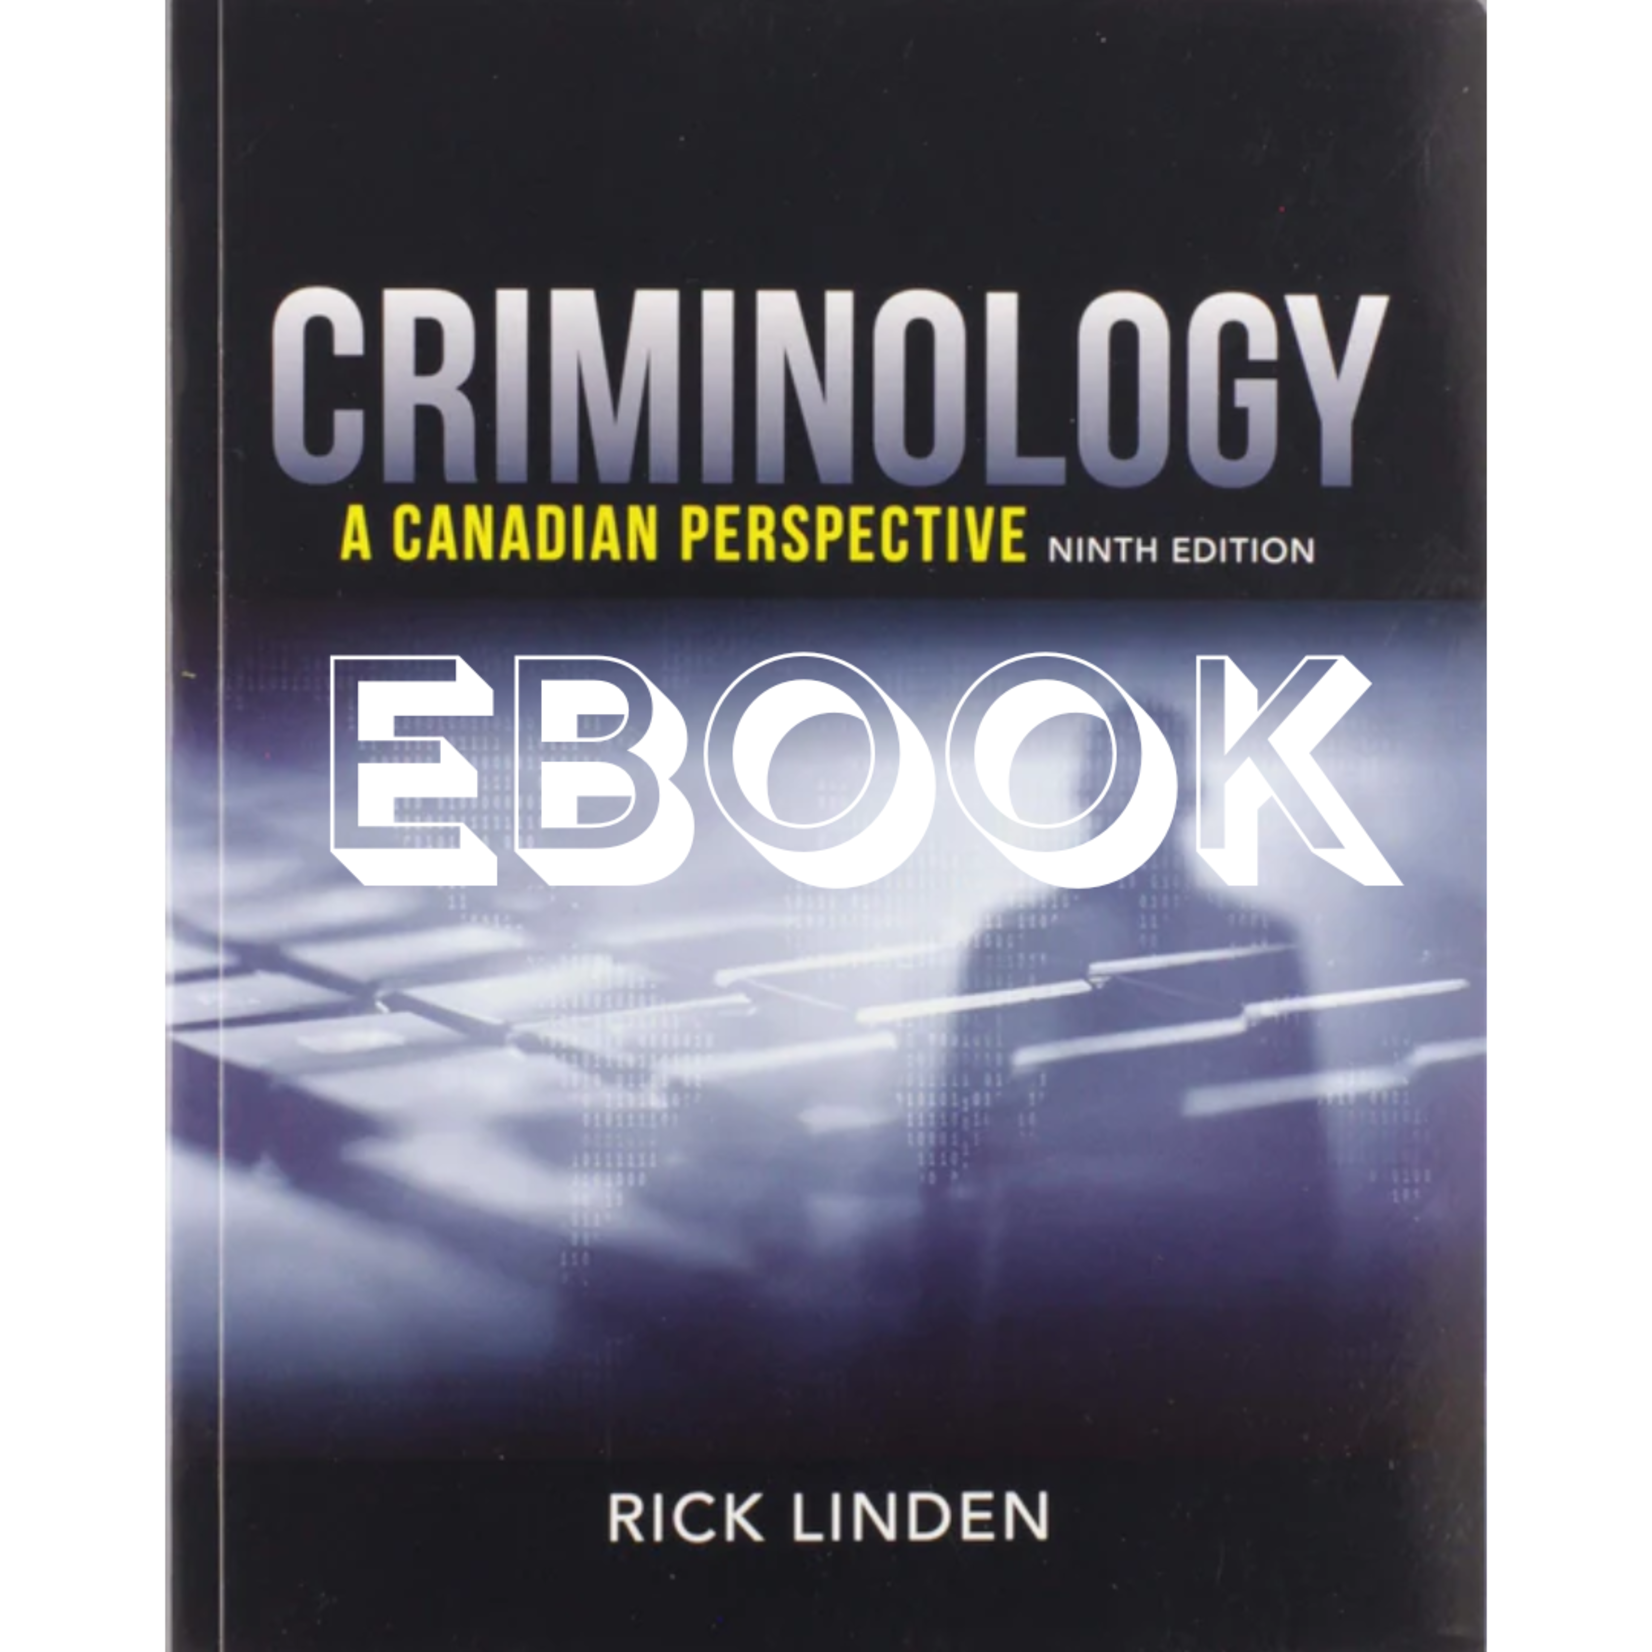 Top Hat Criminology: A Canadian Perspective EBOOK